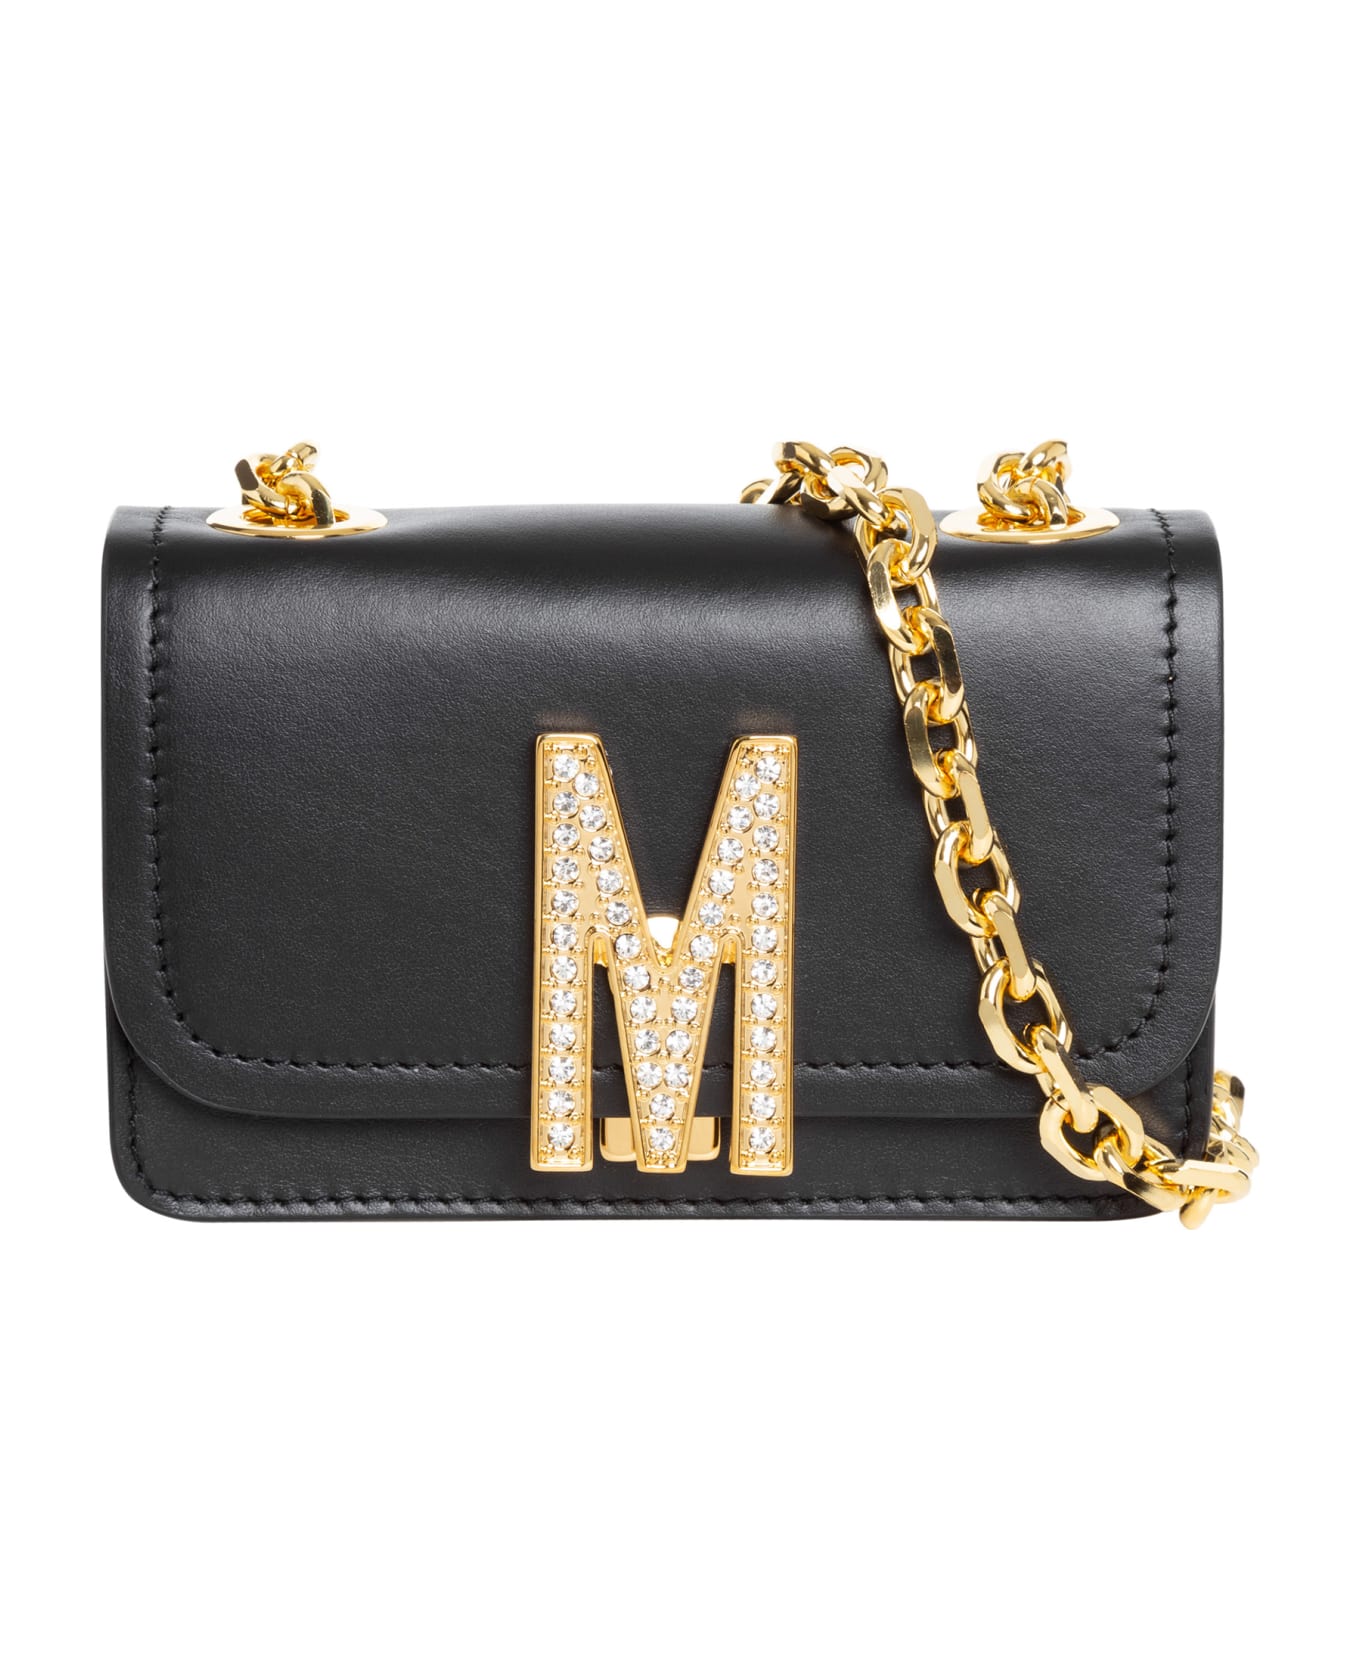 Moschino M Leather Crossbody Bag - Black